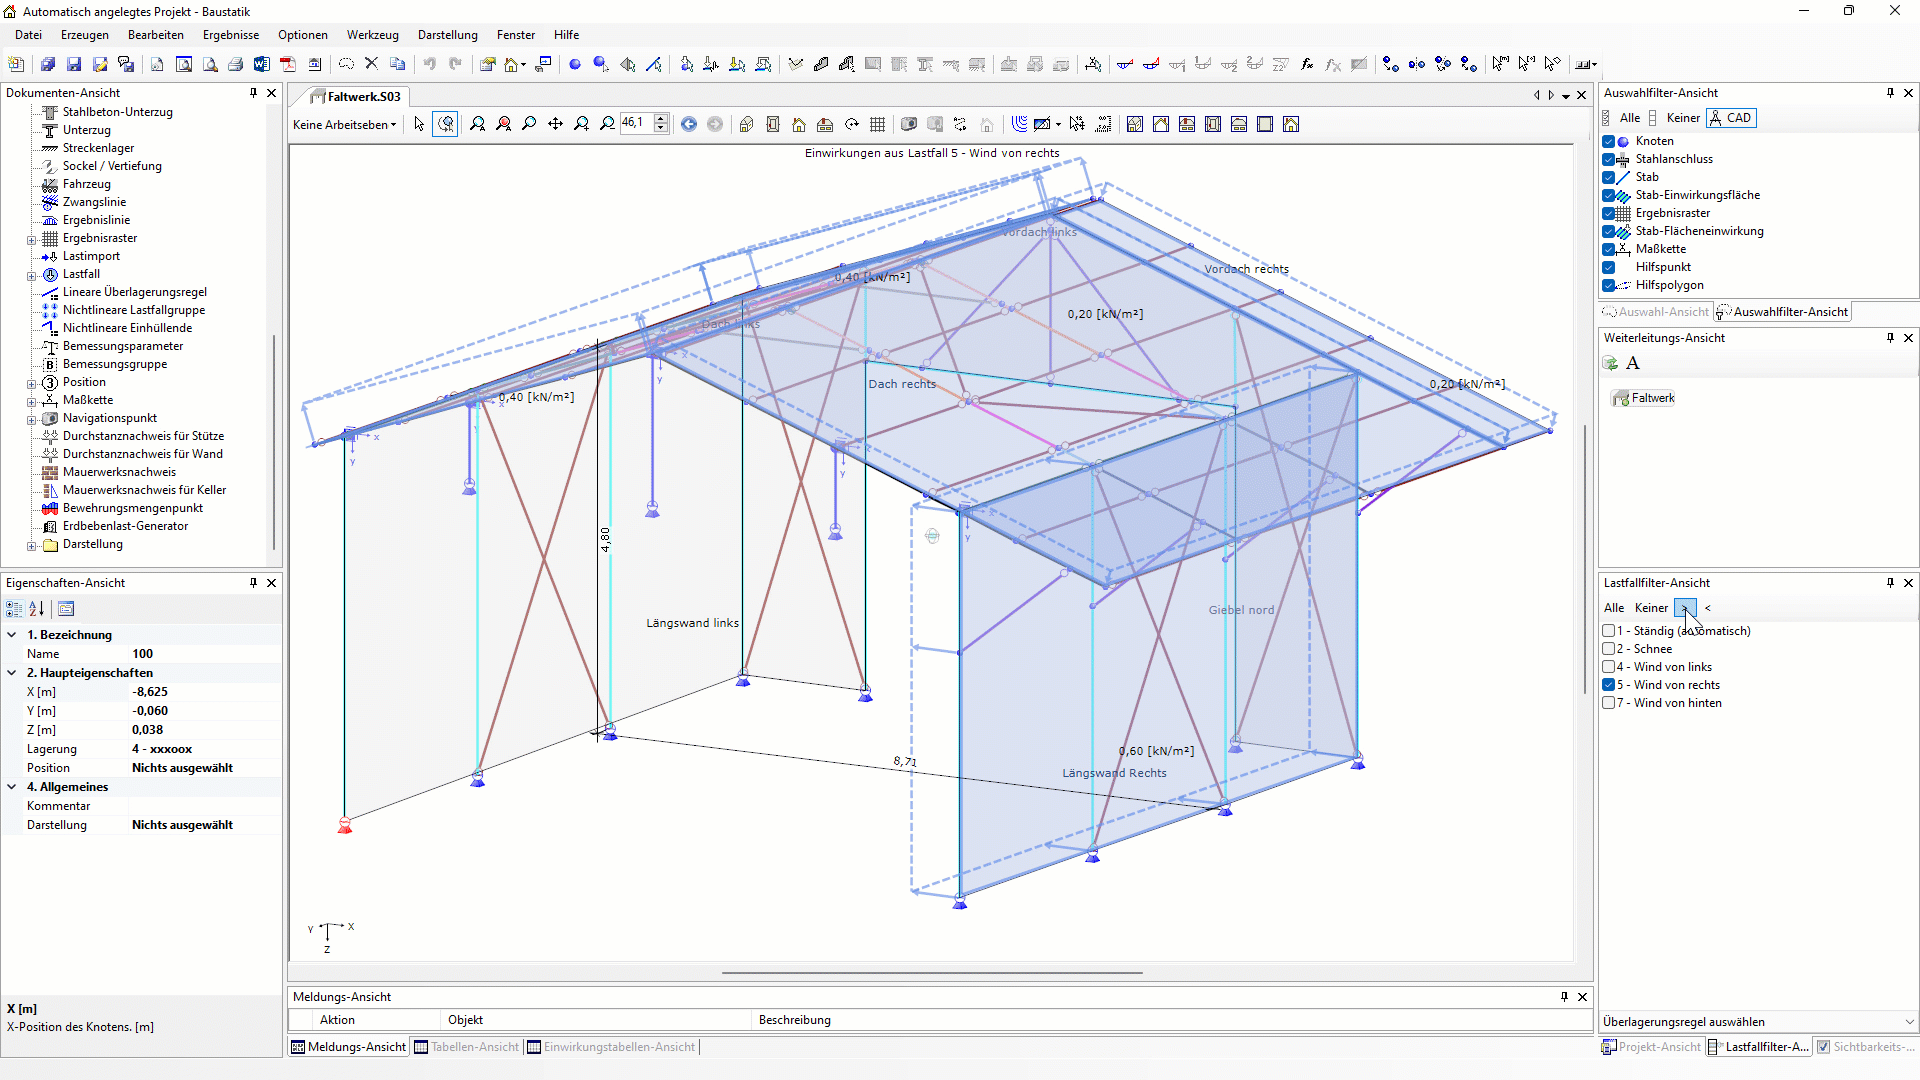 Tragkonstruktion in 3D, Berechnet mit D.I.E. Baustatik